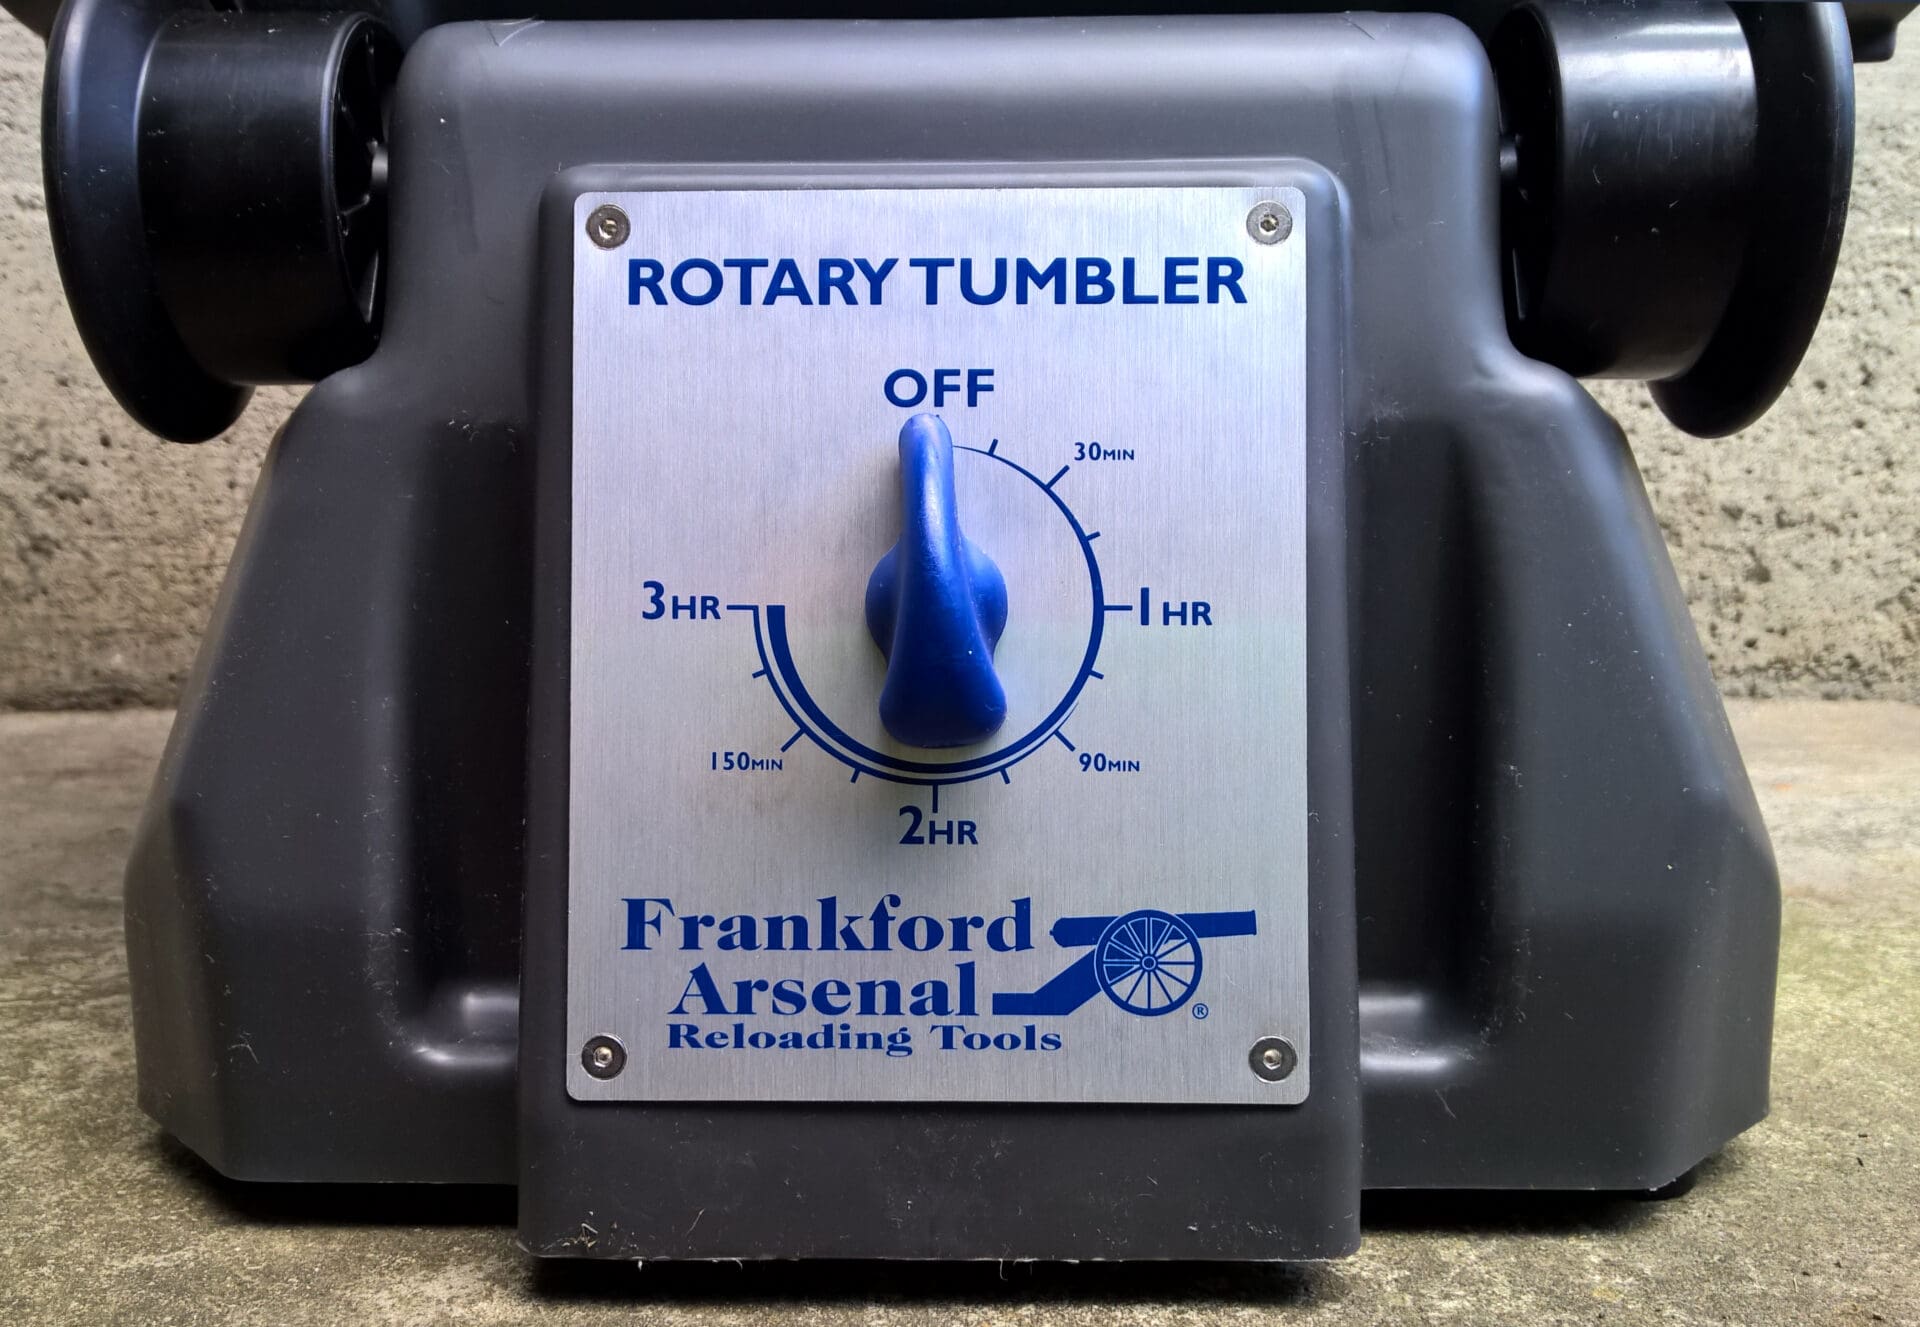 Frankford Arsenal Rotary Tumbler Kit; is it worth it? 